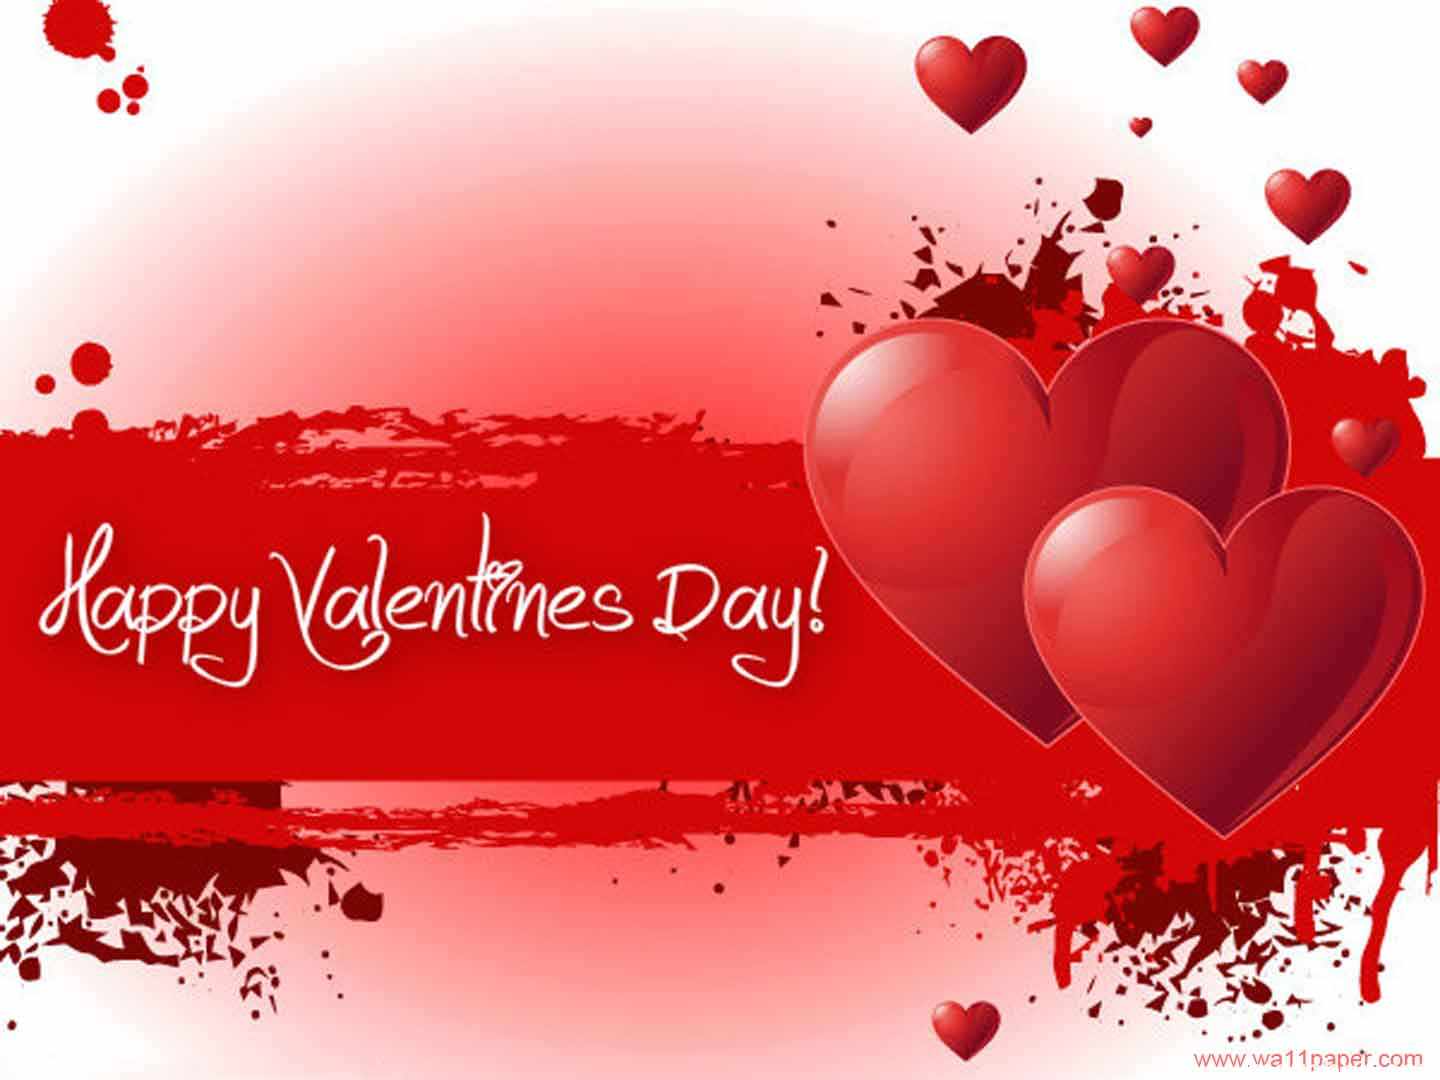 Happy Valentine’s Day Hearts Picture